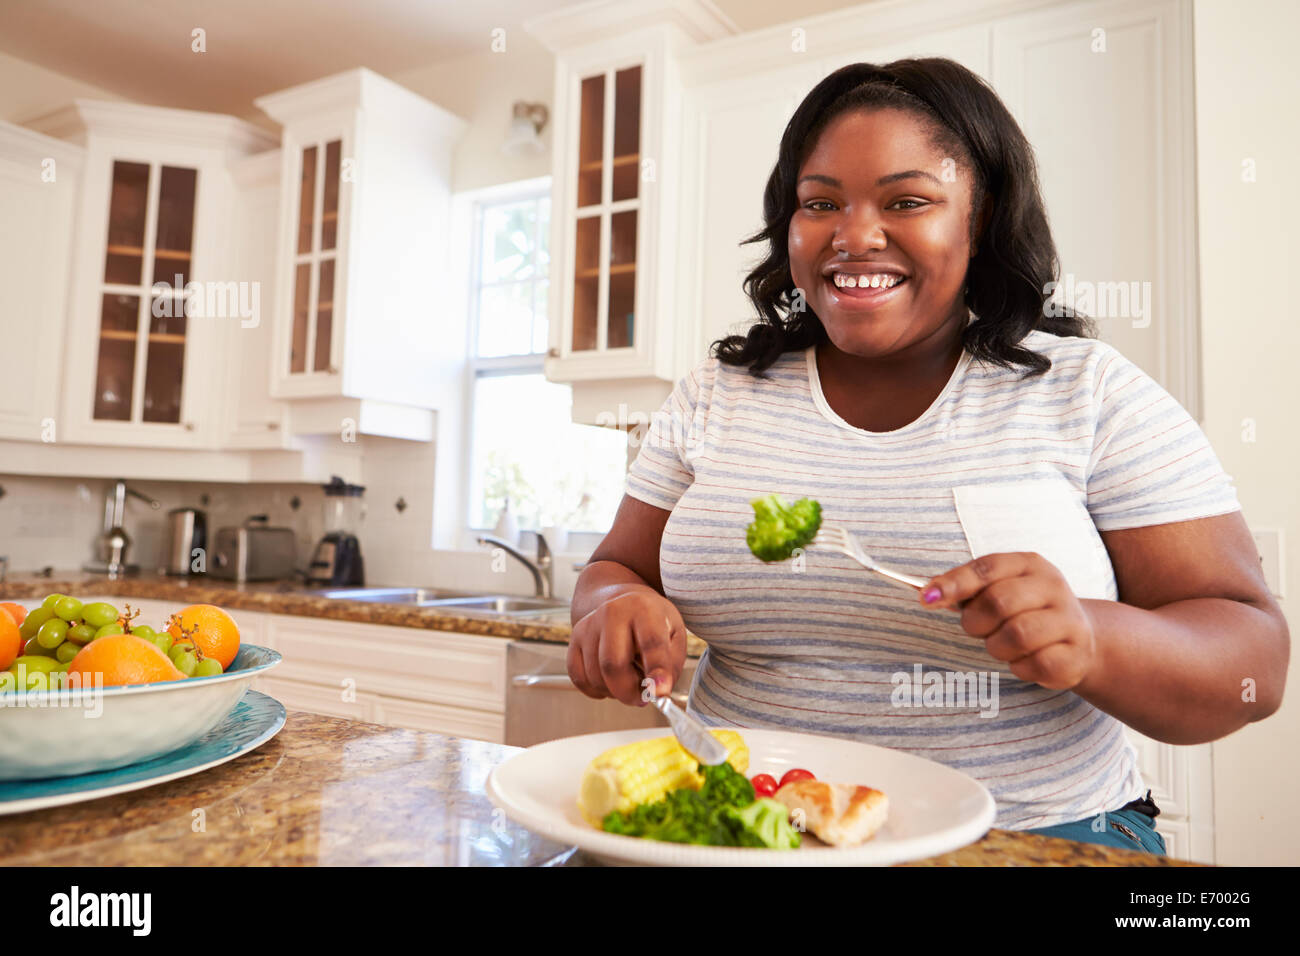 Donna sovrappeso mangiare sano pasto in cucina Foto Stock